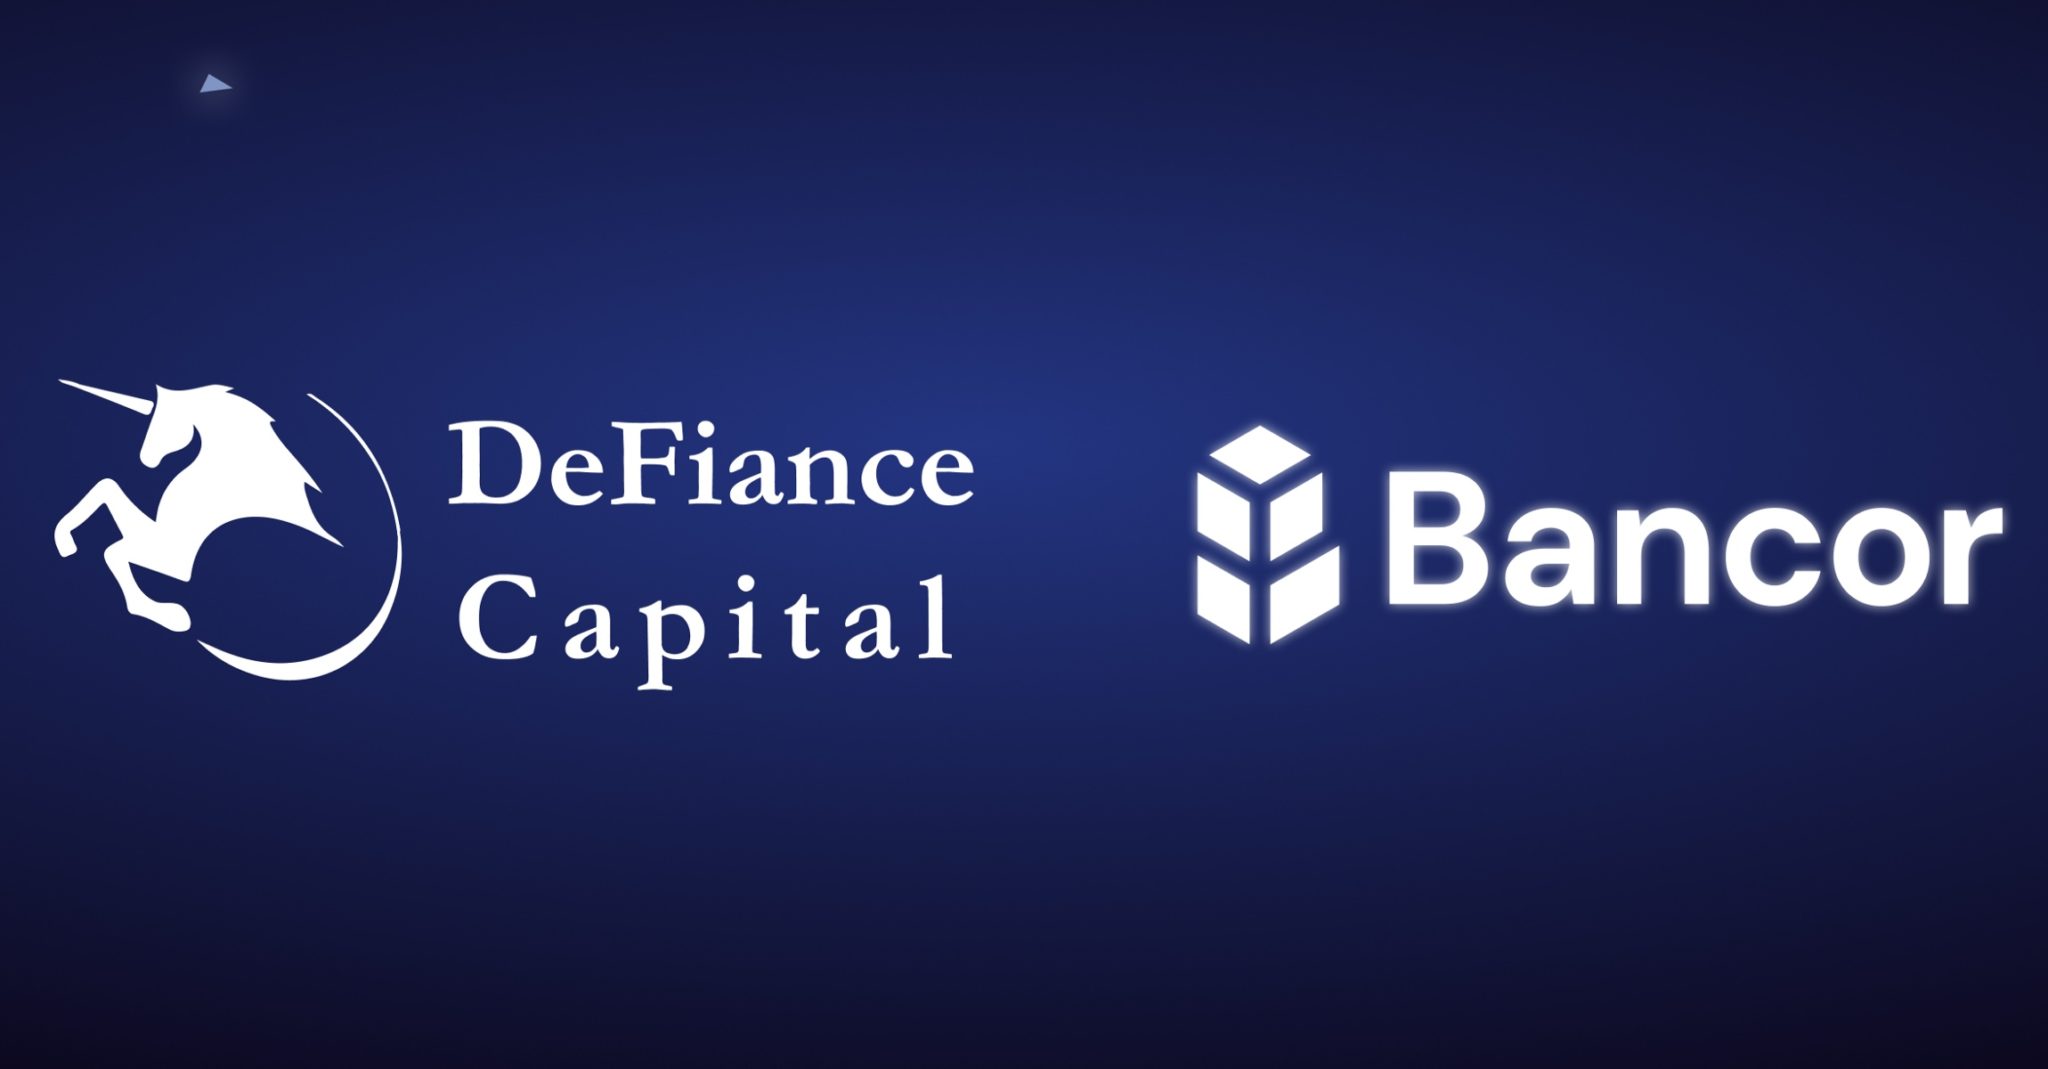 DeFiance Capital Joins Bancor Protocol as Strategic ...